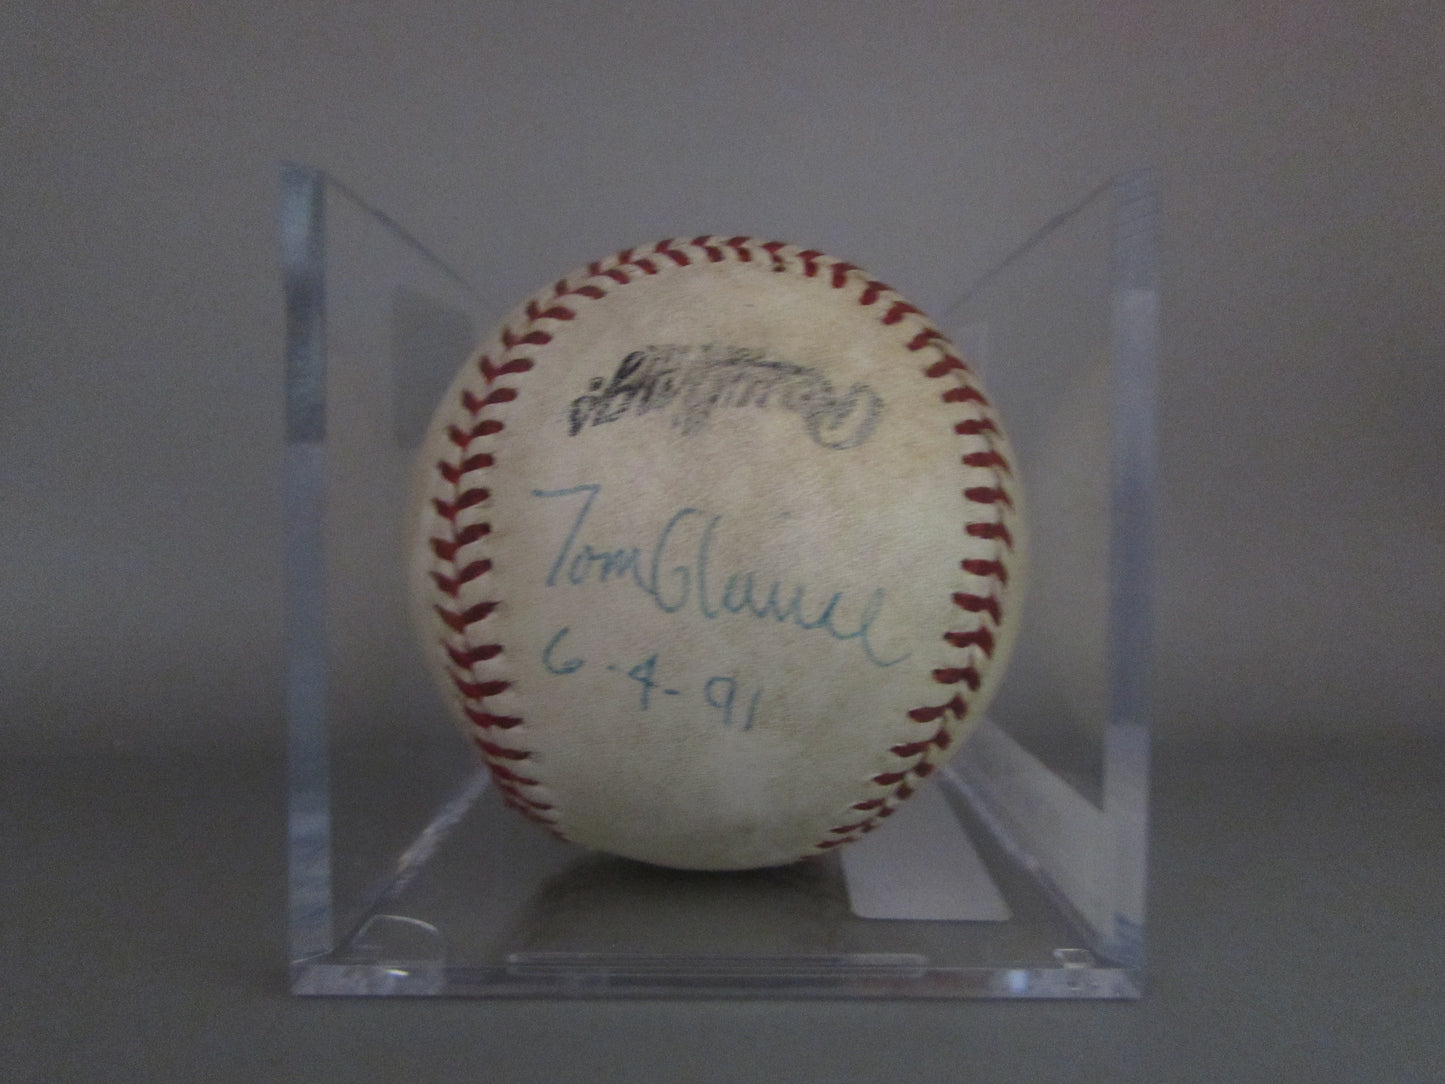 Tom Glavine signed baseball